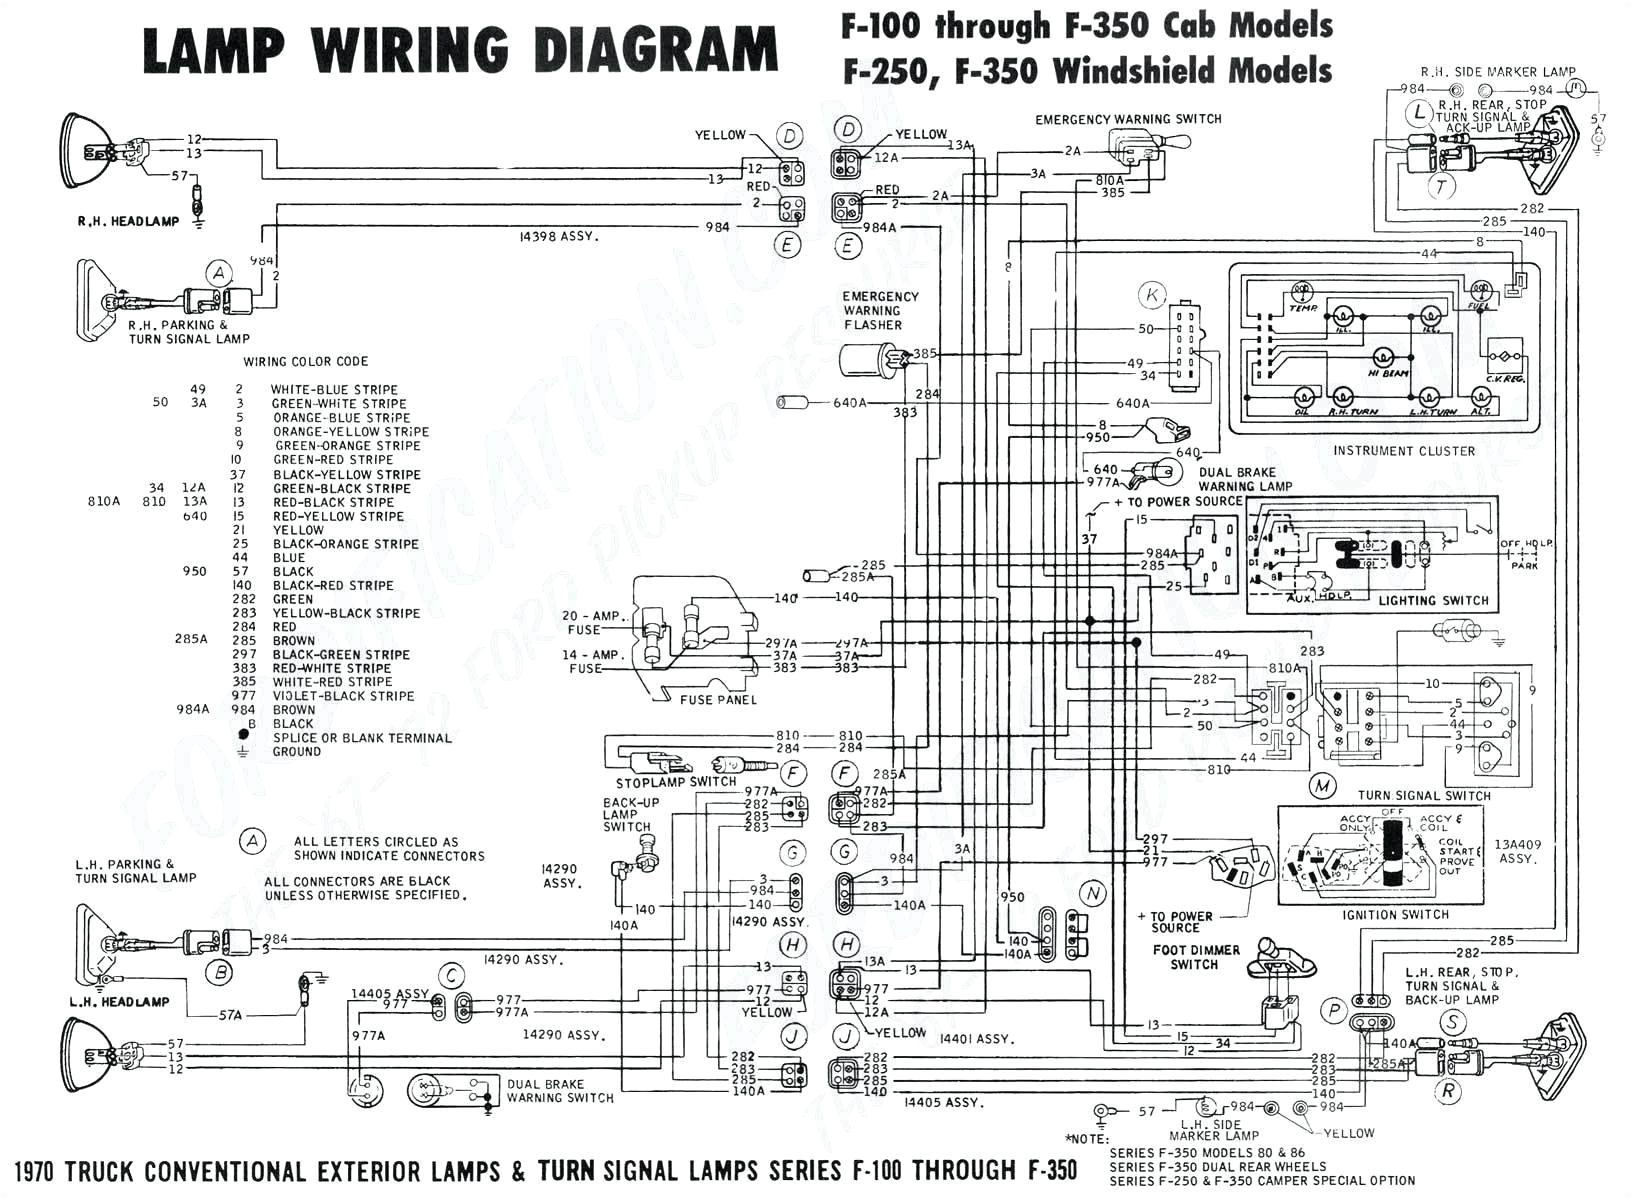 2000 chevy venture rear heater core diagram wiring wiring diagrams 2001chevysilveradoheatercorediagram diagram mazda cx 5 2000